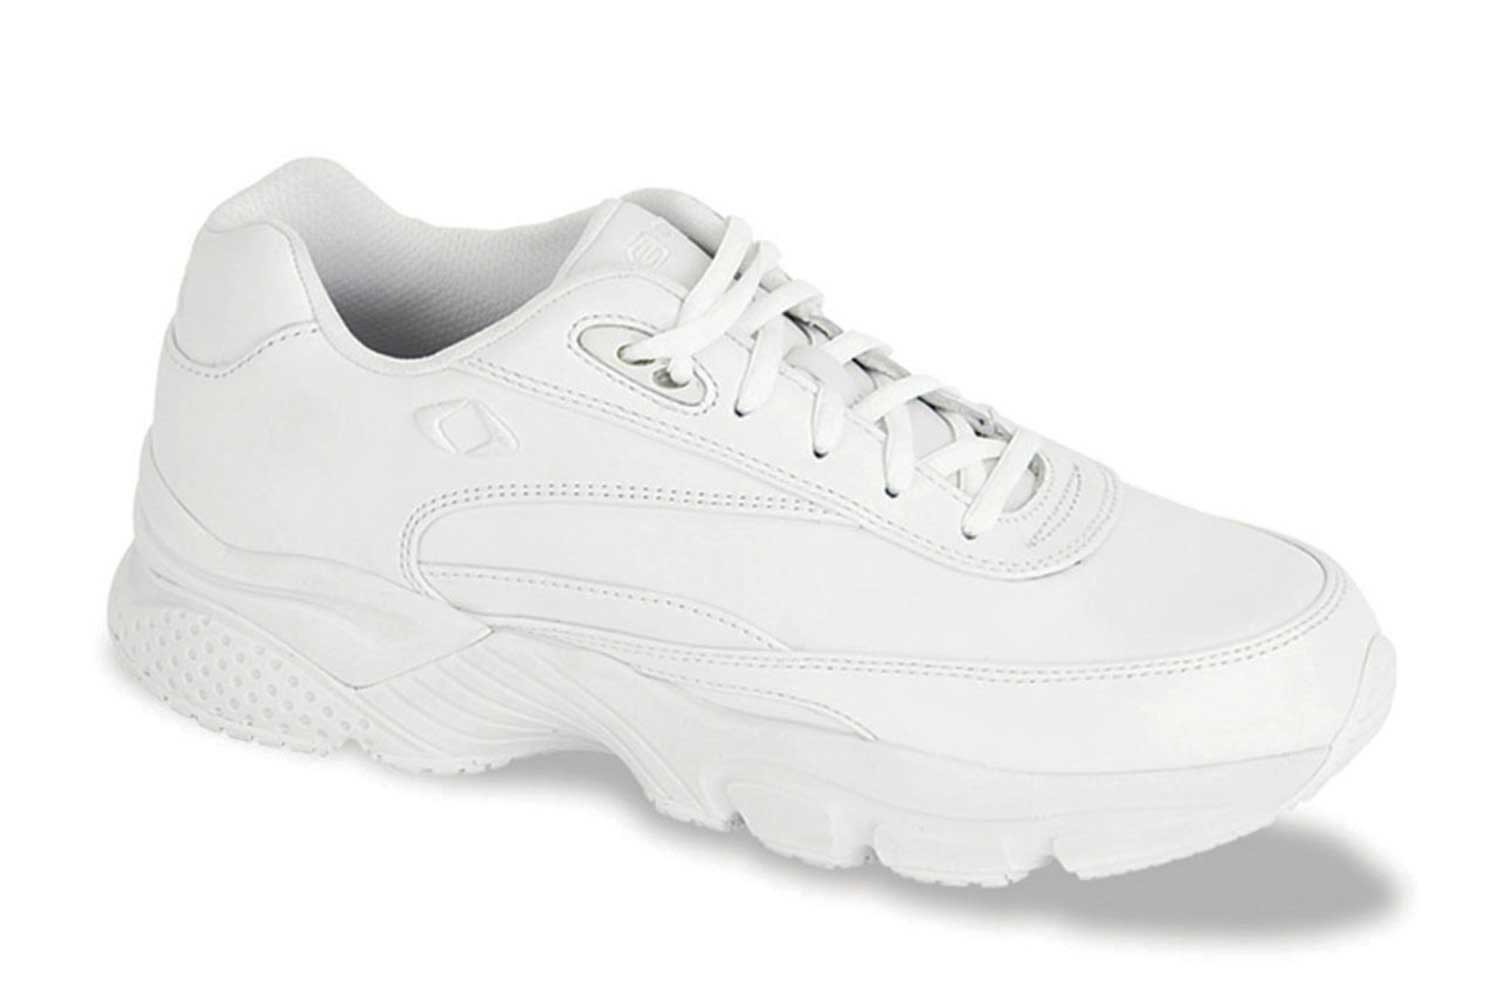 Apex Shoes X826W Walker Athletic Shoe - Women's Comfort Therapeutic Diabetic Shoe - Extra Depth For Orthotics